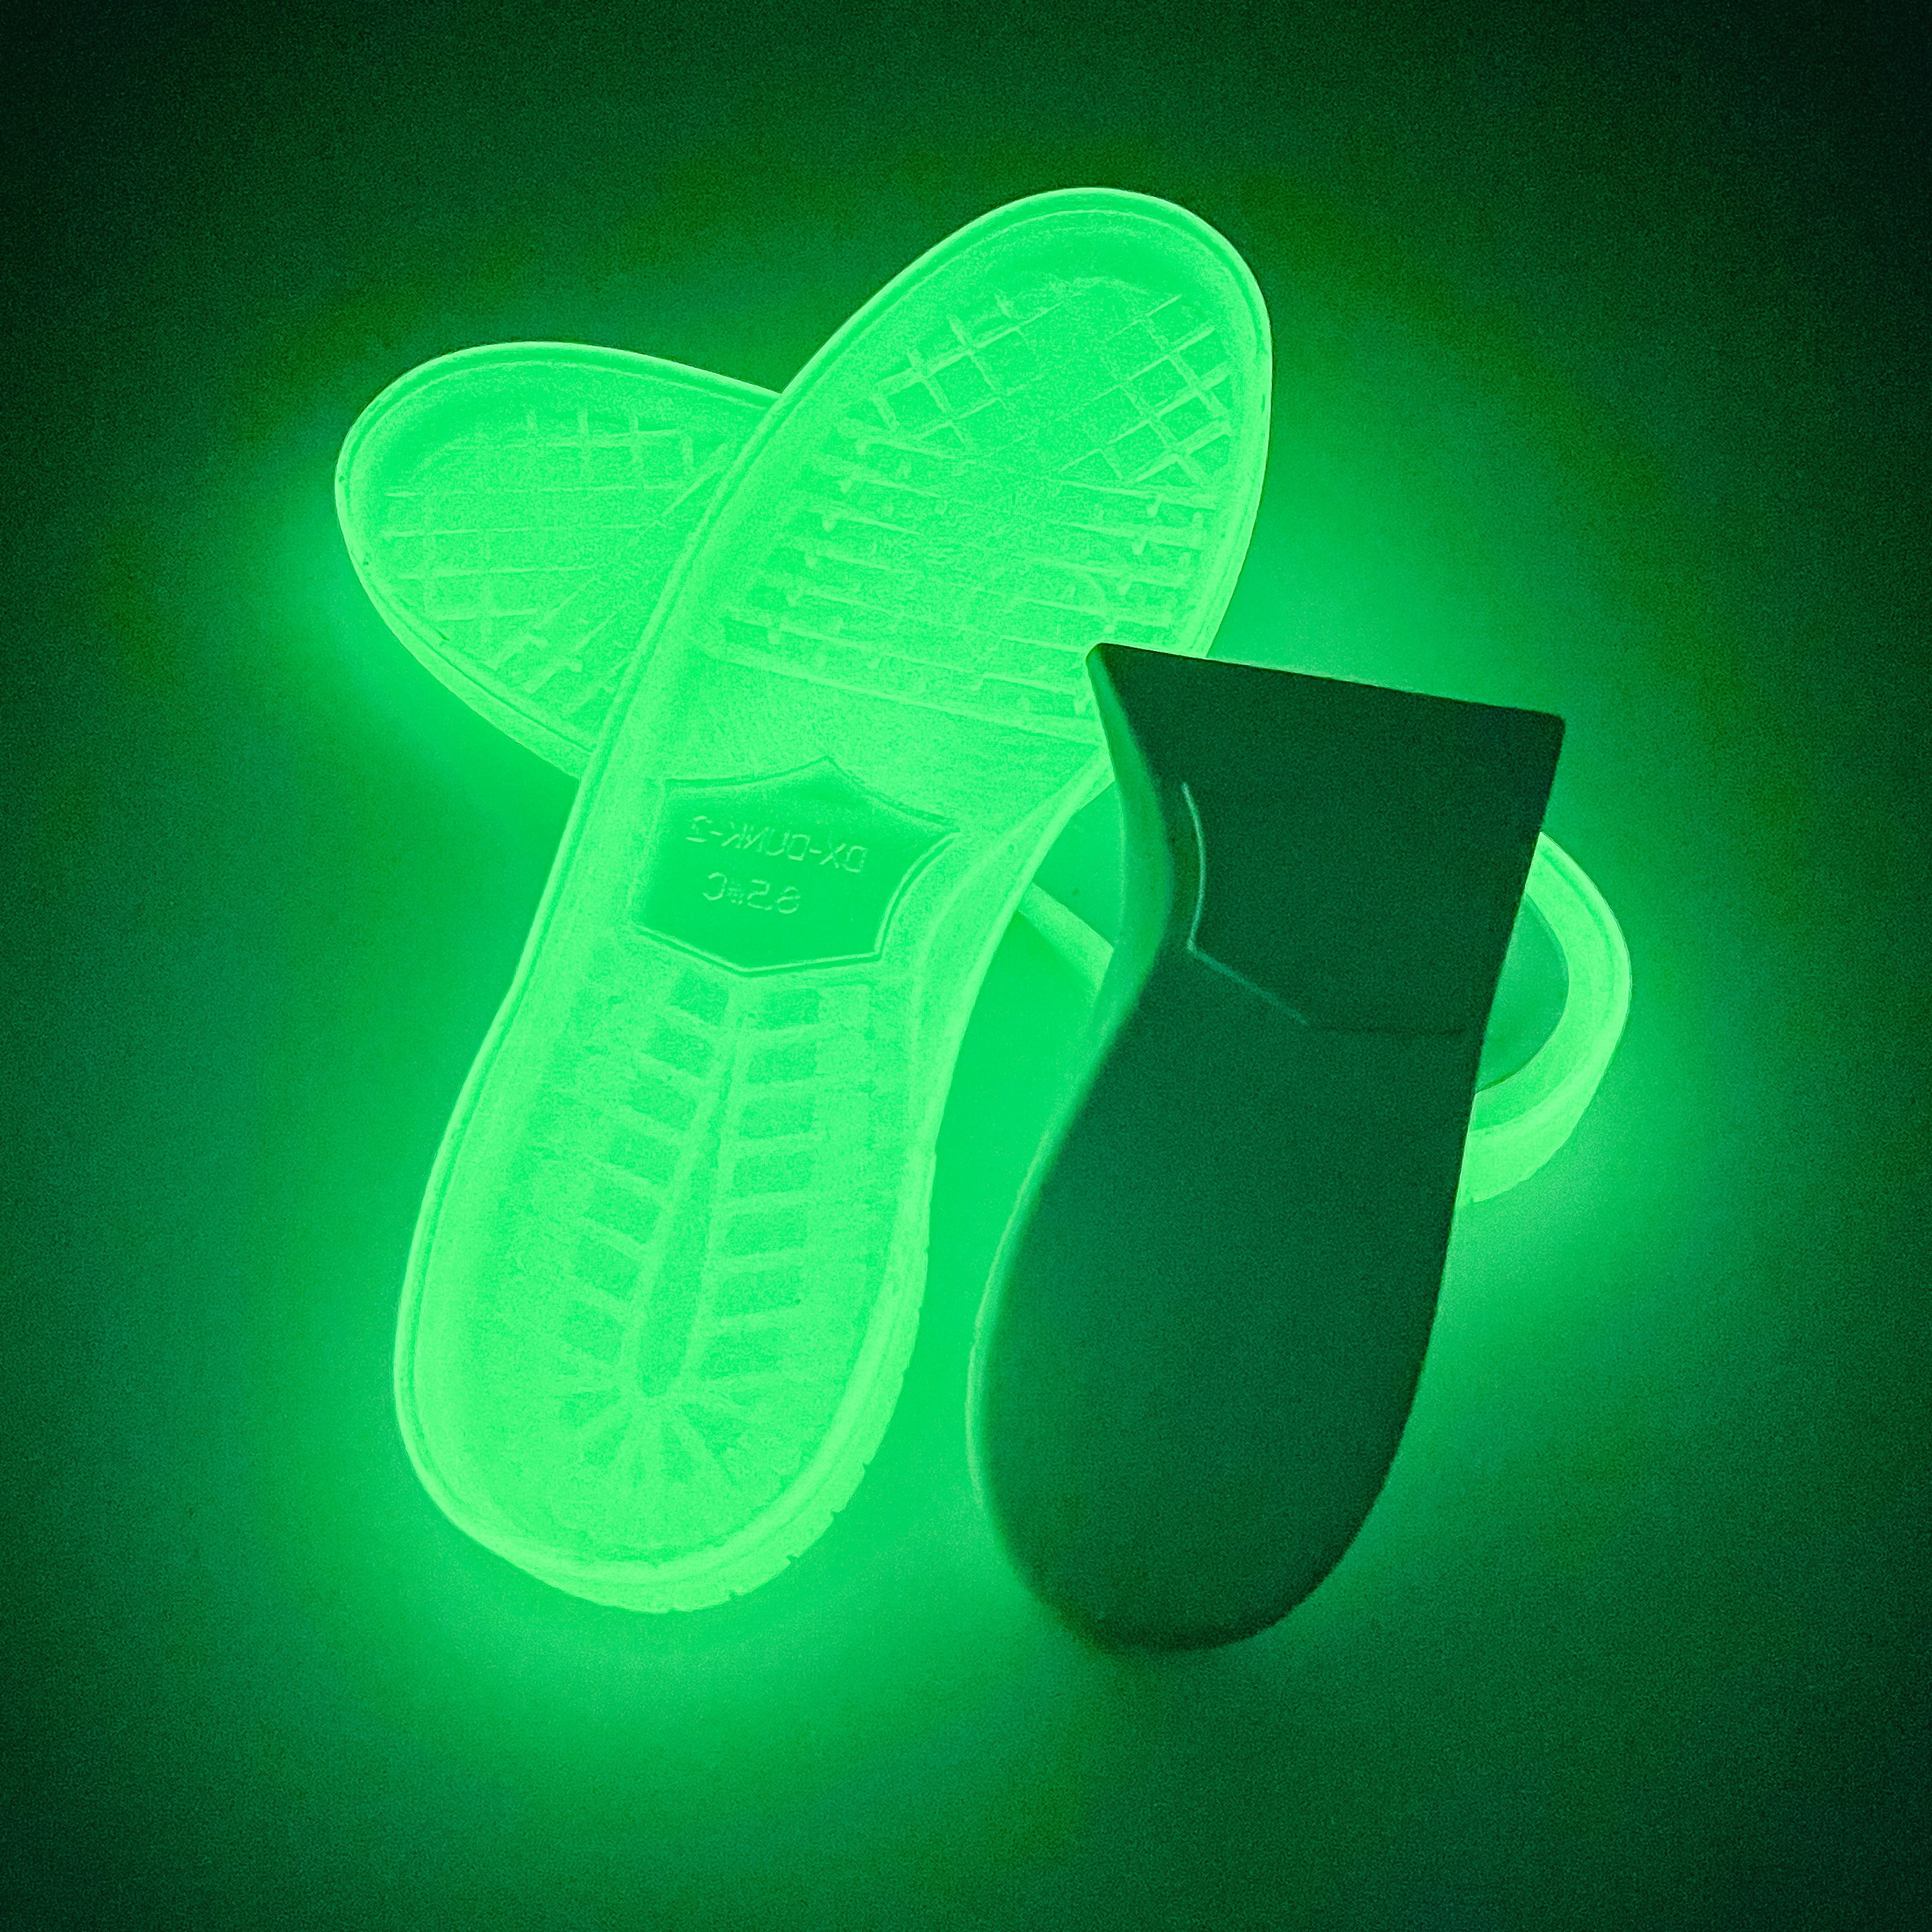 SkateBoard (SB Dunk) Shoe Soles, Transparent Glow